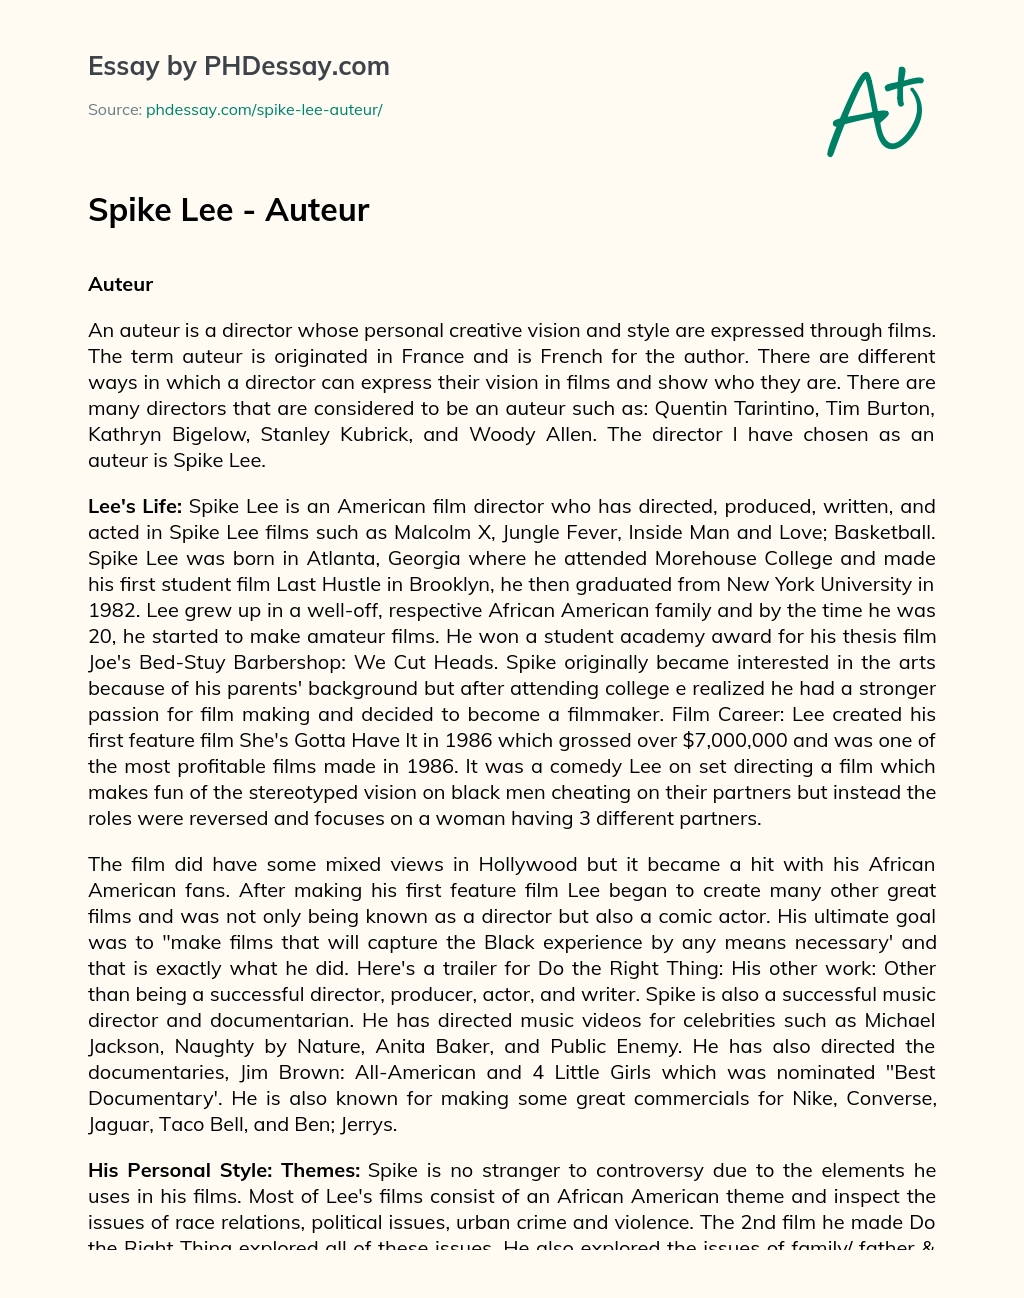 Spike Lee – Auteur essay